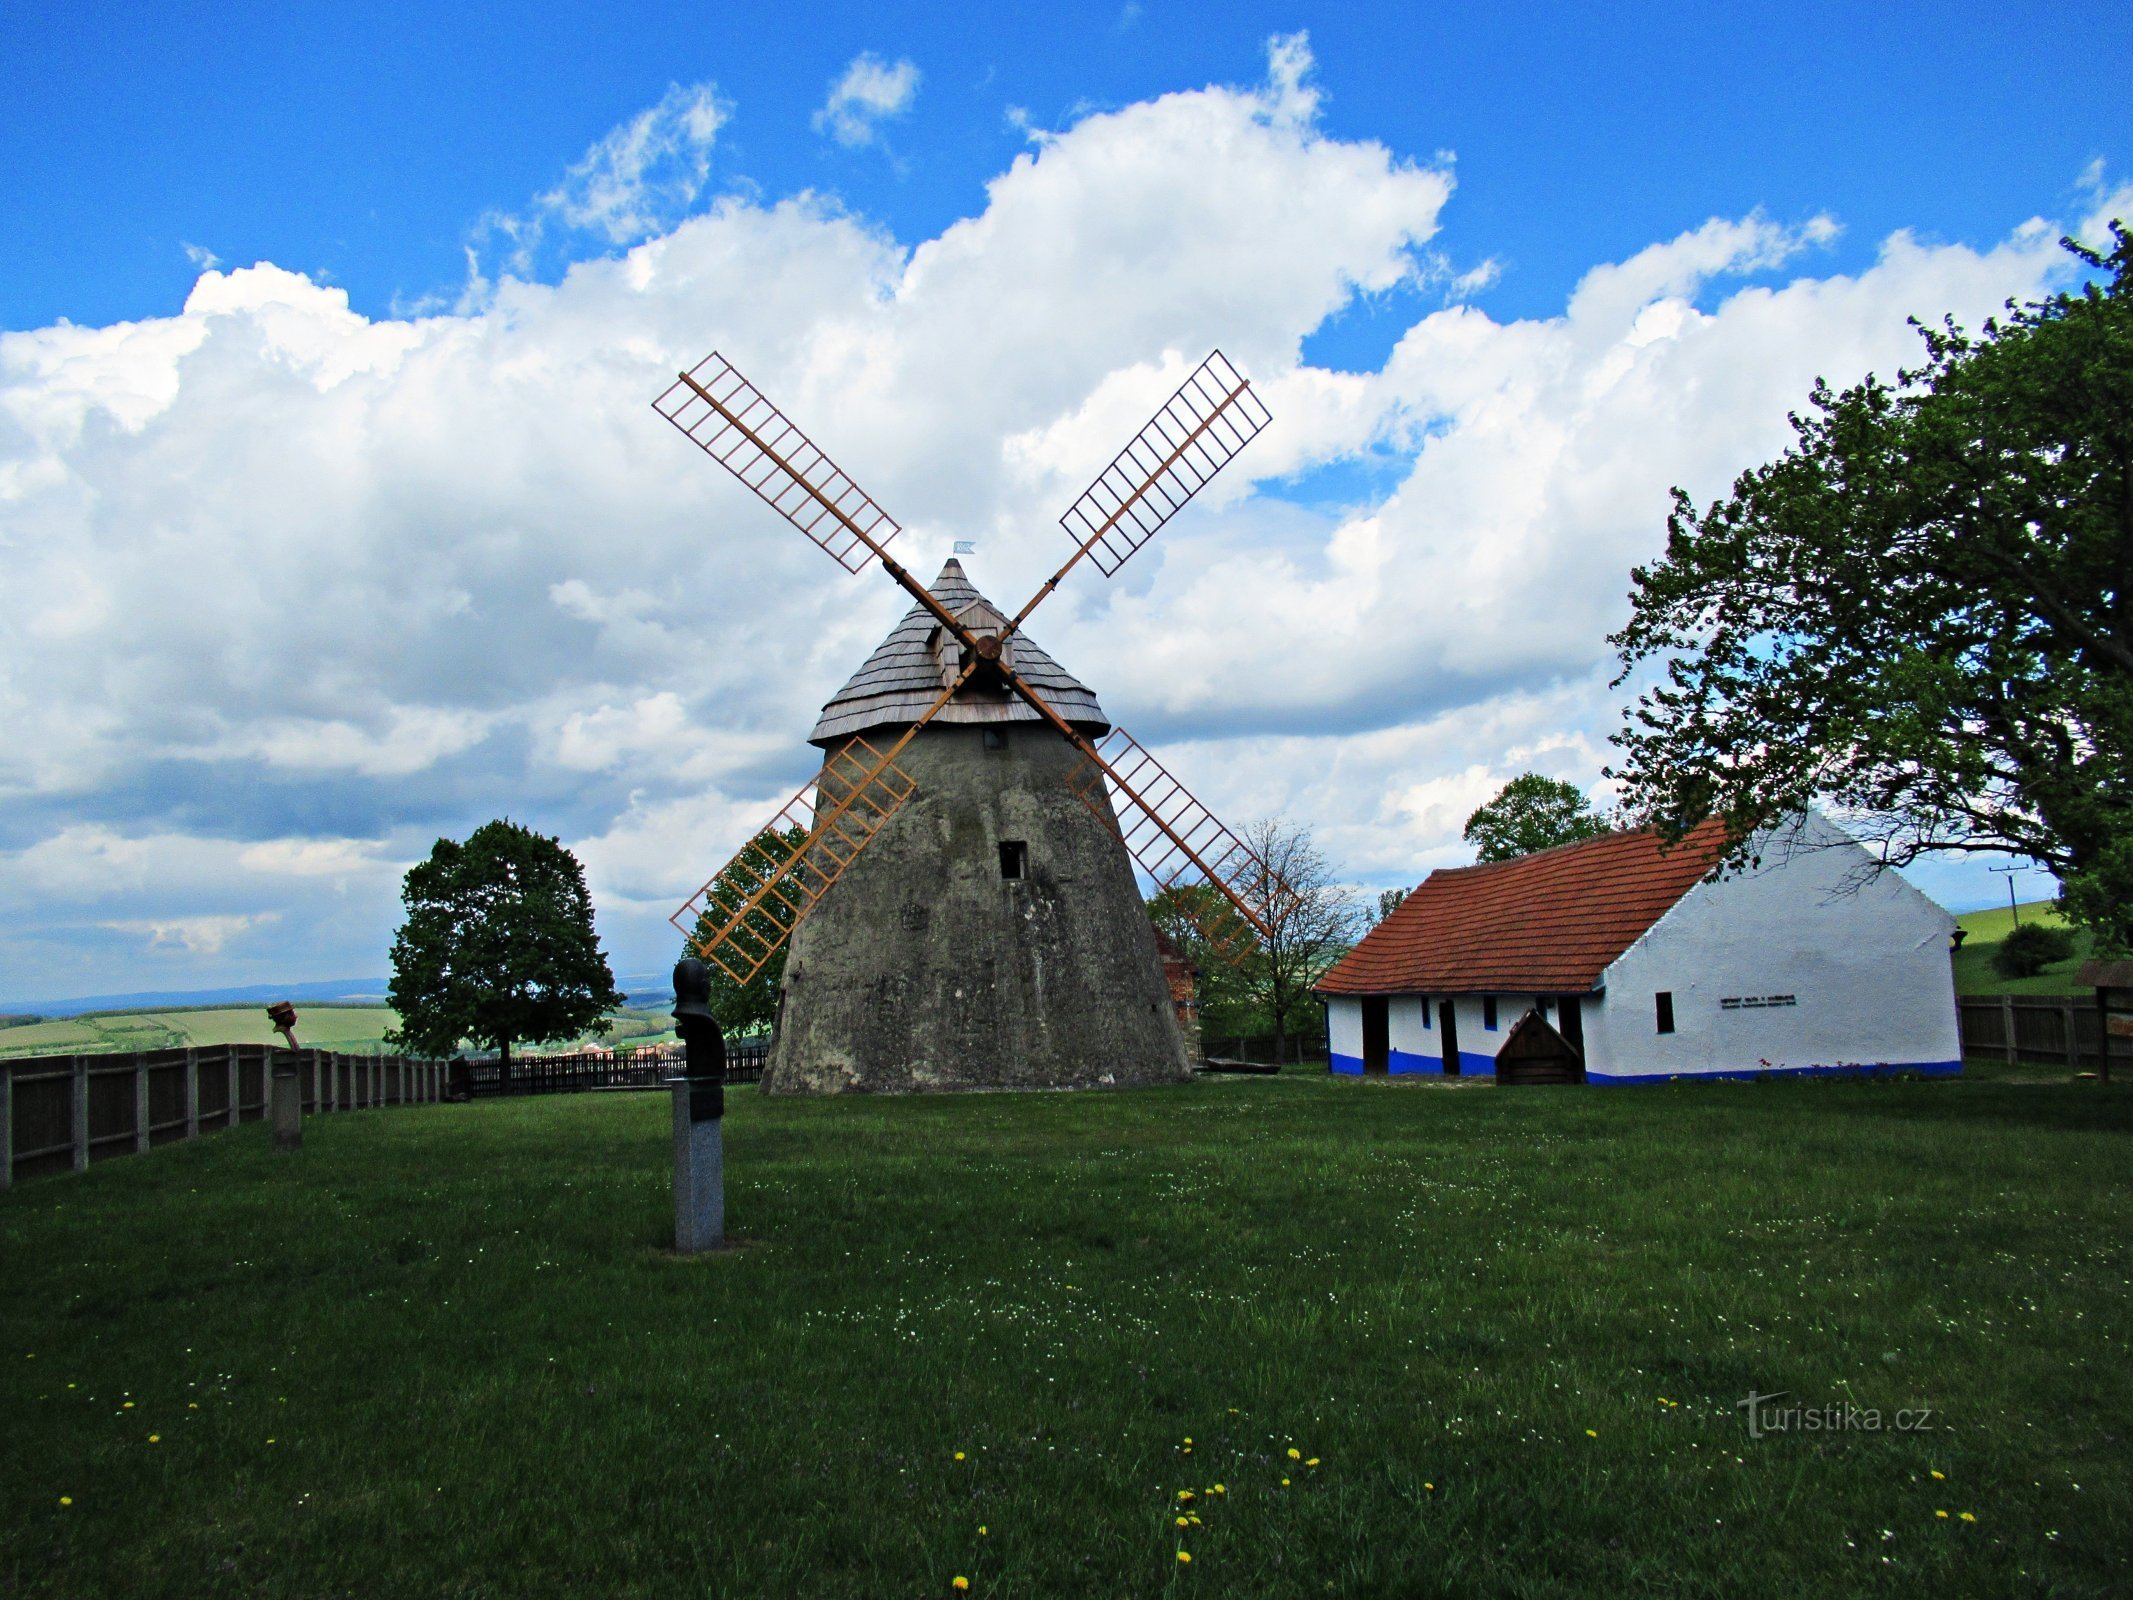 Området med vindmøllen over landsbyen Kuželov i Slovácko